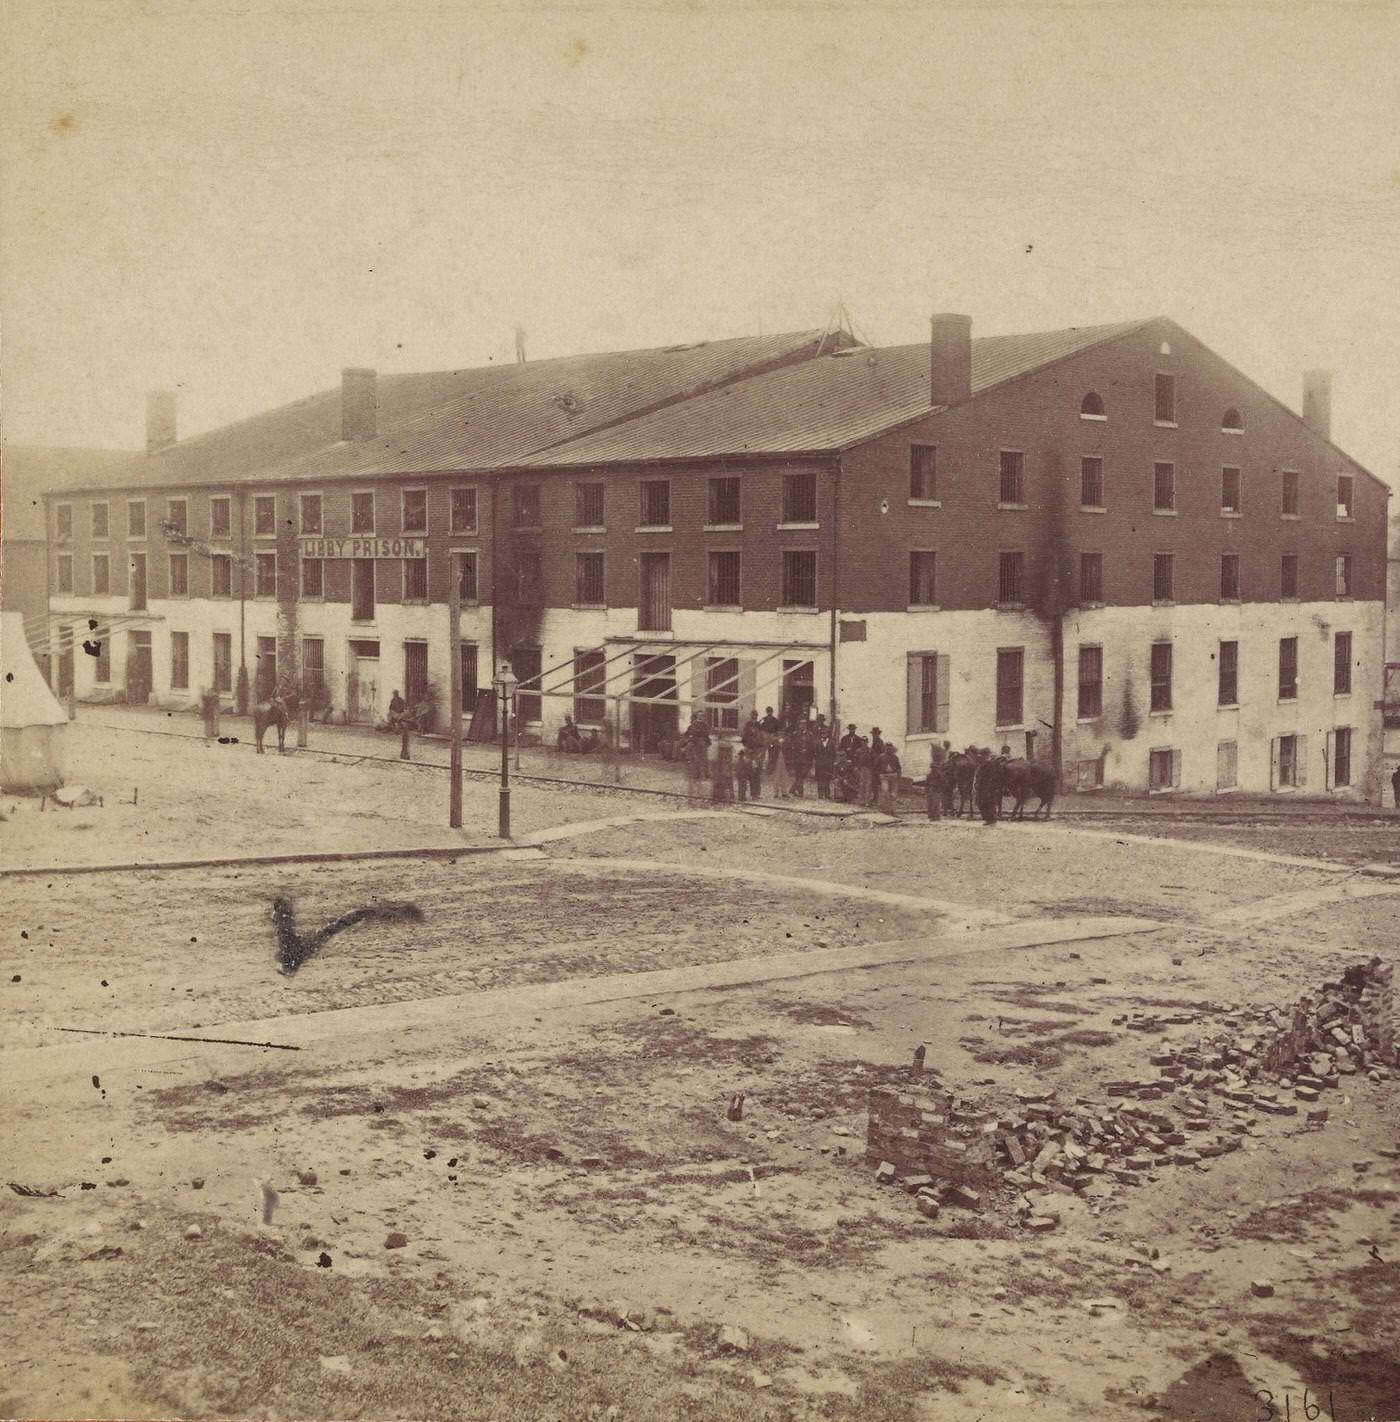 Libby Prison, north side, Richmond, 1900